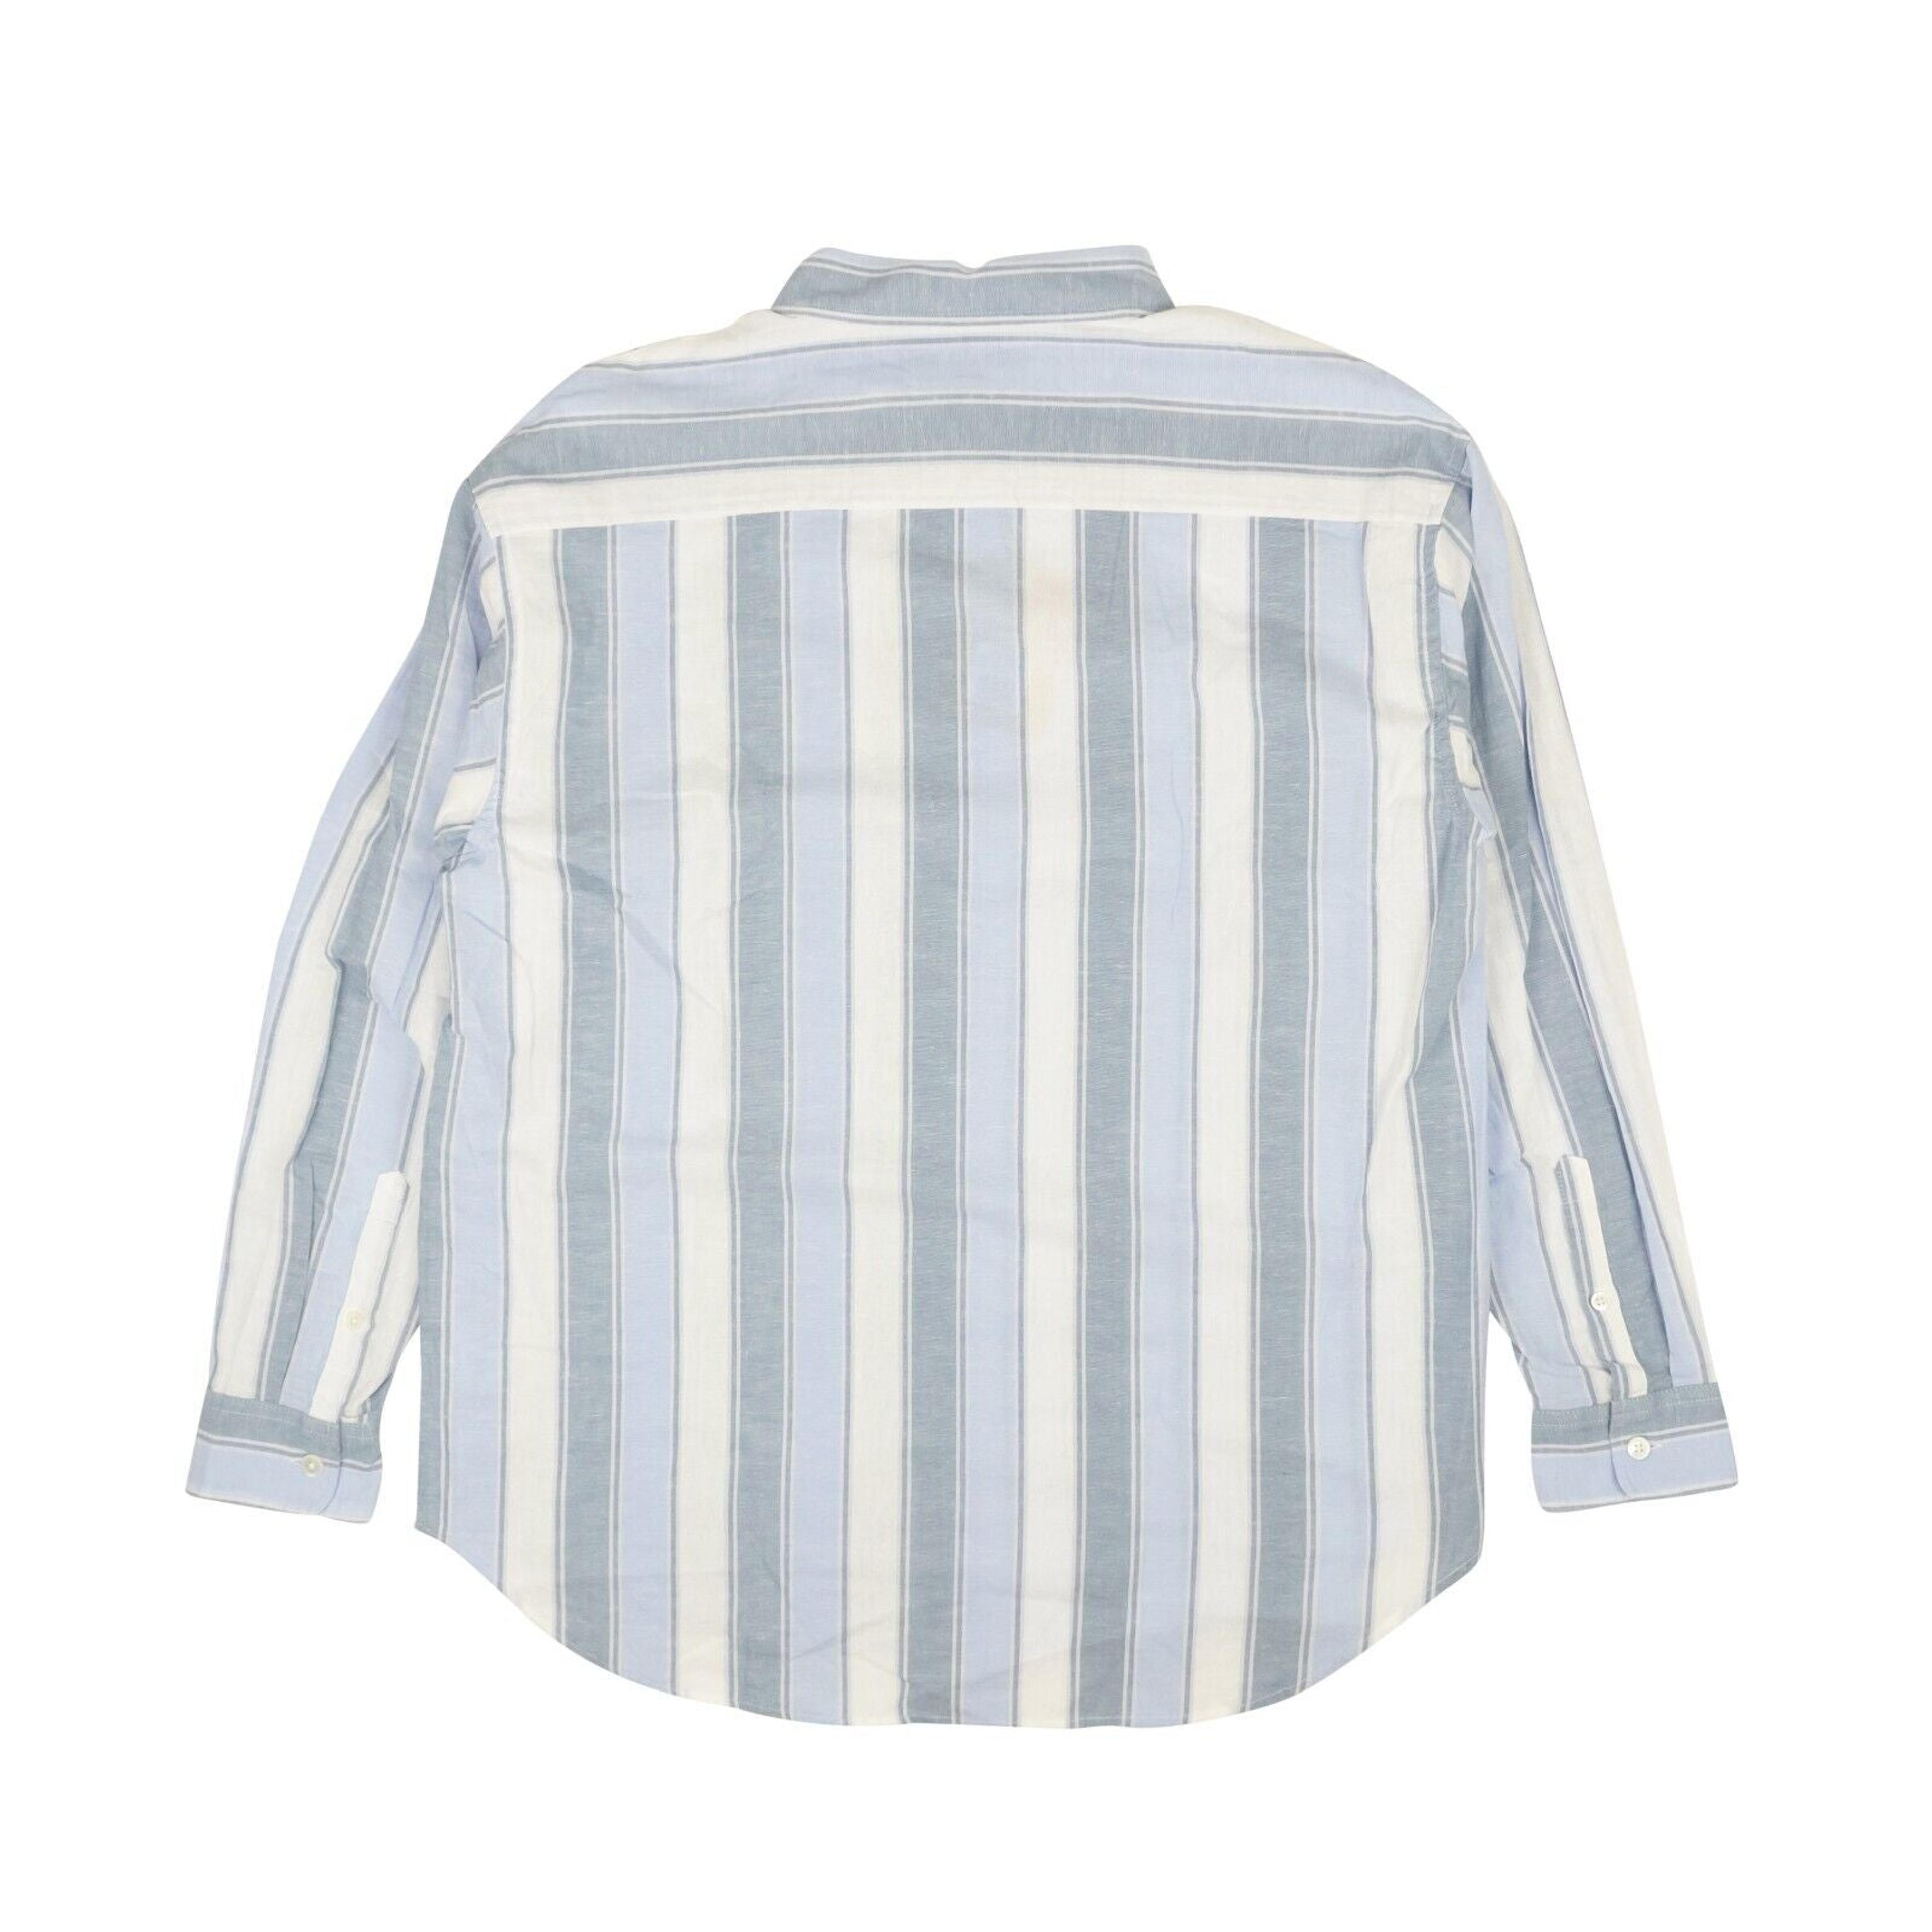 Alternate View 2 of Blue Cotton Wide Stripe Button Down Shirt